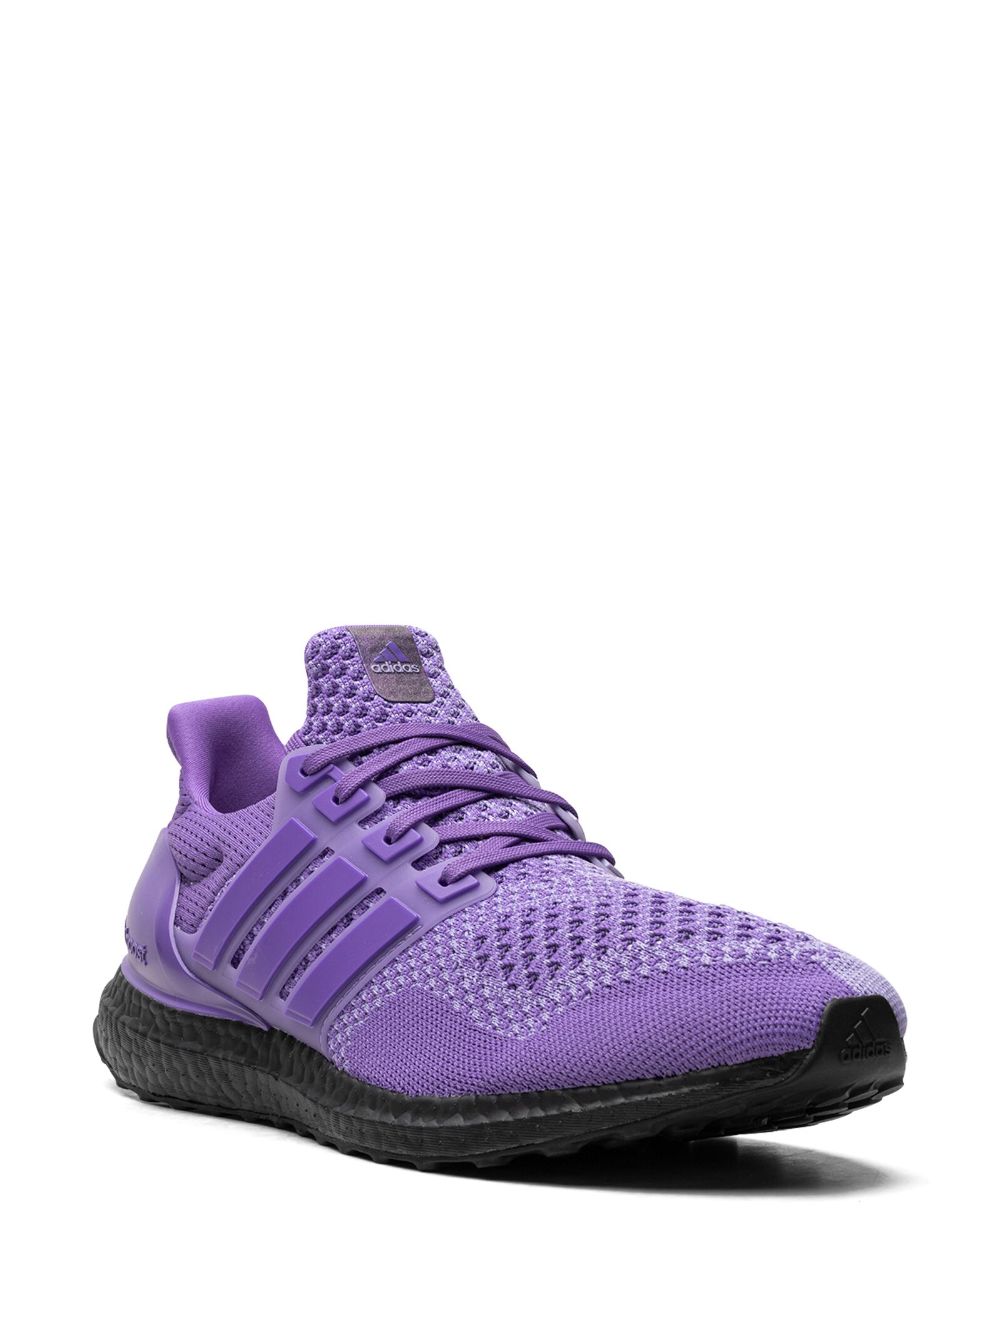 adidas Ultraboost 1.0 DNA "Purple Tint" sneakers - Paars